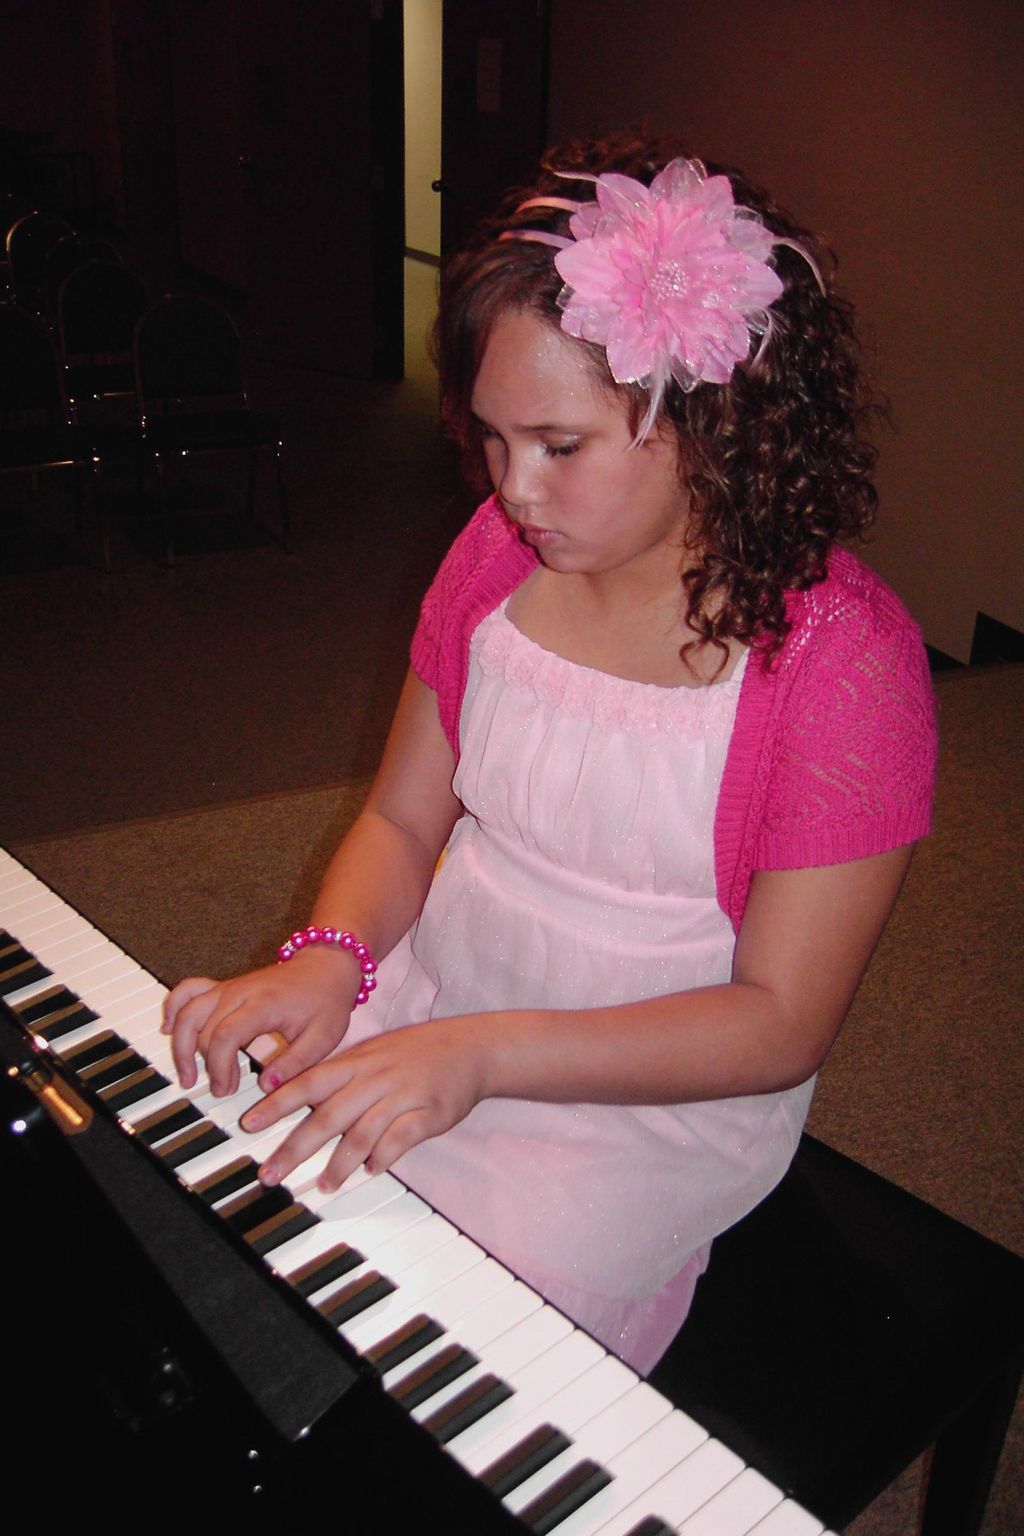 Piano Lessons, Making Music Fun!